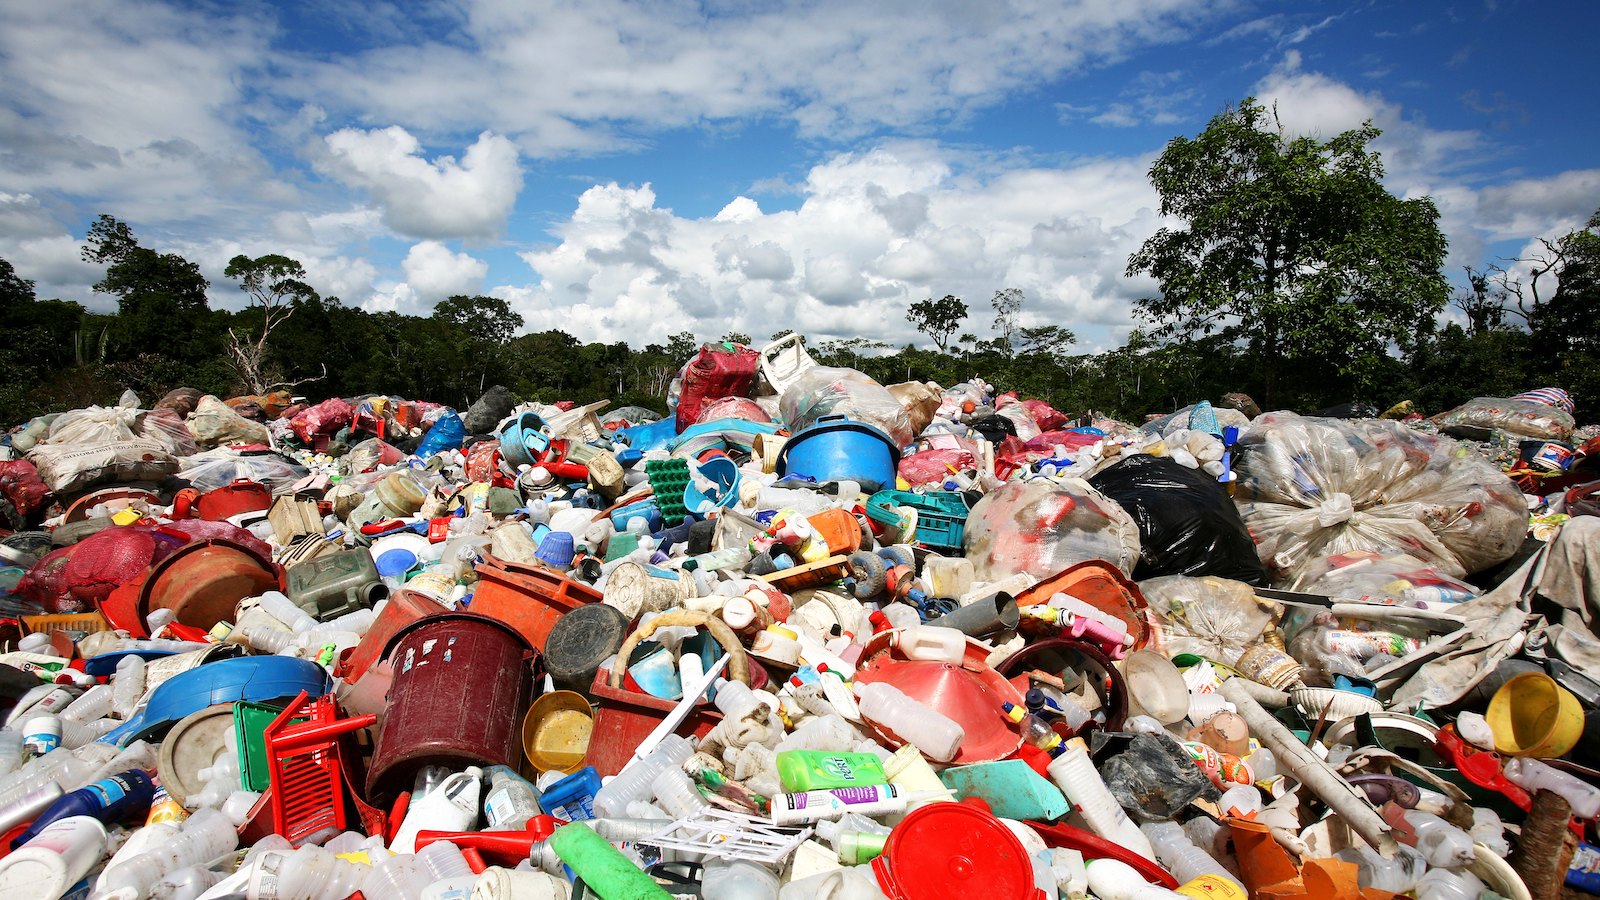 A large pile of plastic trash